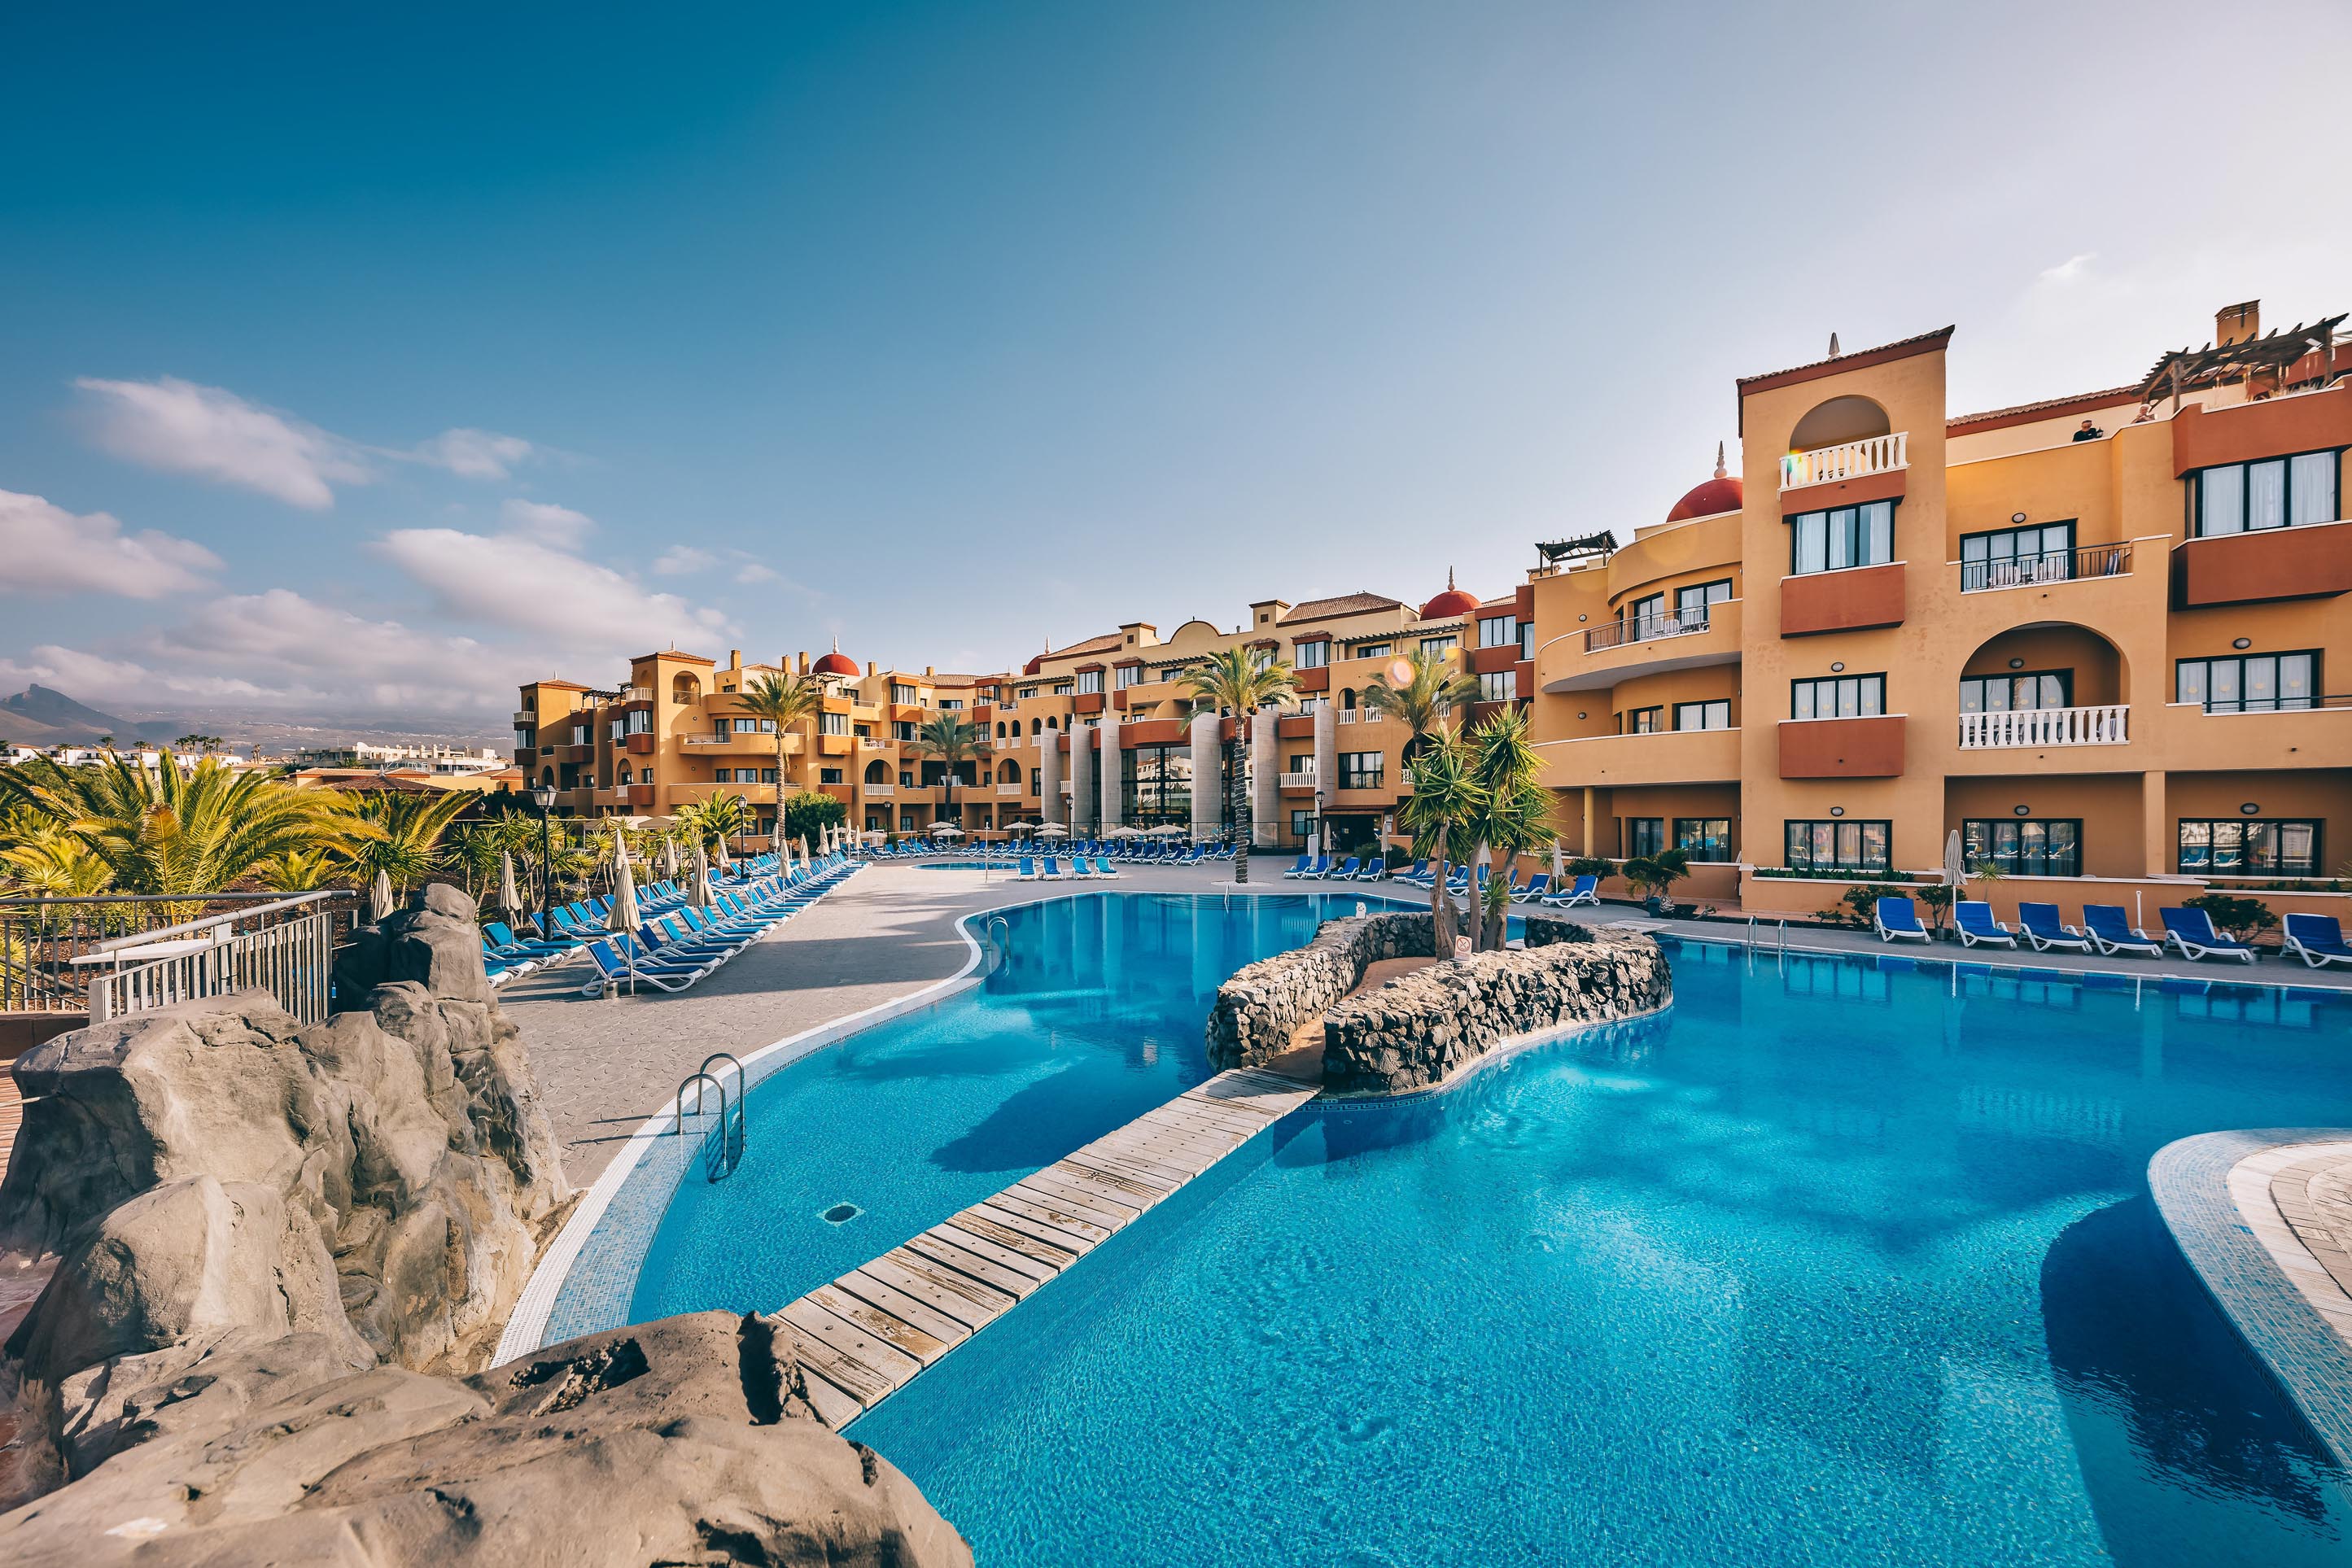 Canaries - Tenerife - Espagne - Hôtel Grand Muthu Golf Plaza 4* by Ôvoyages